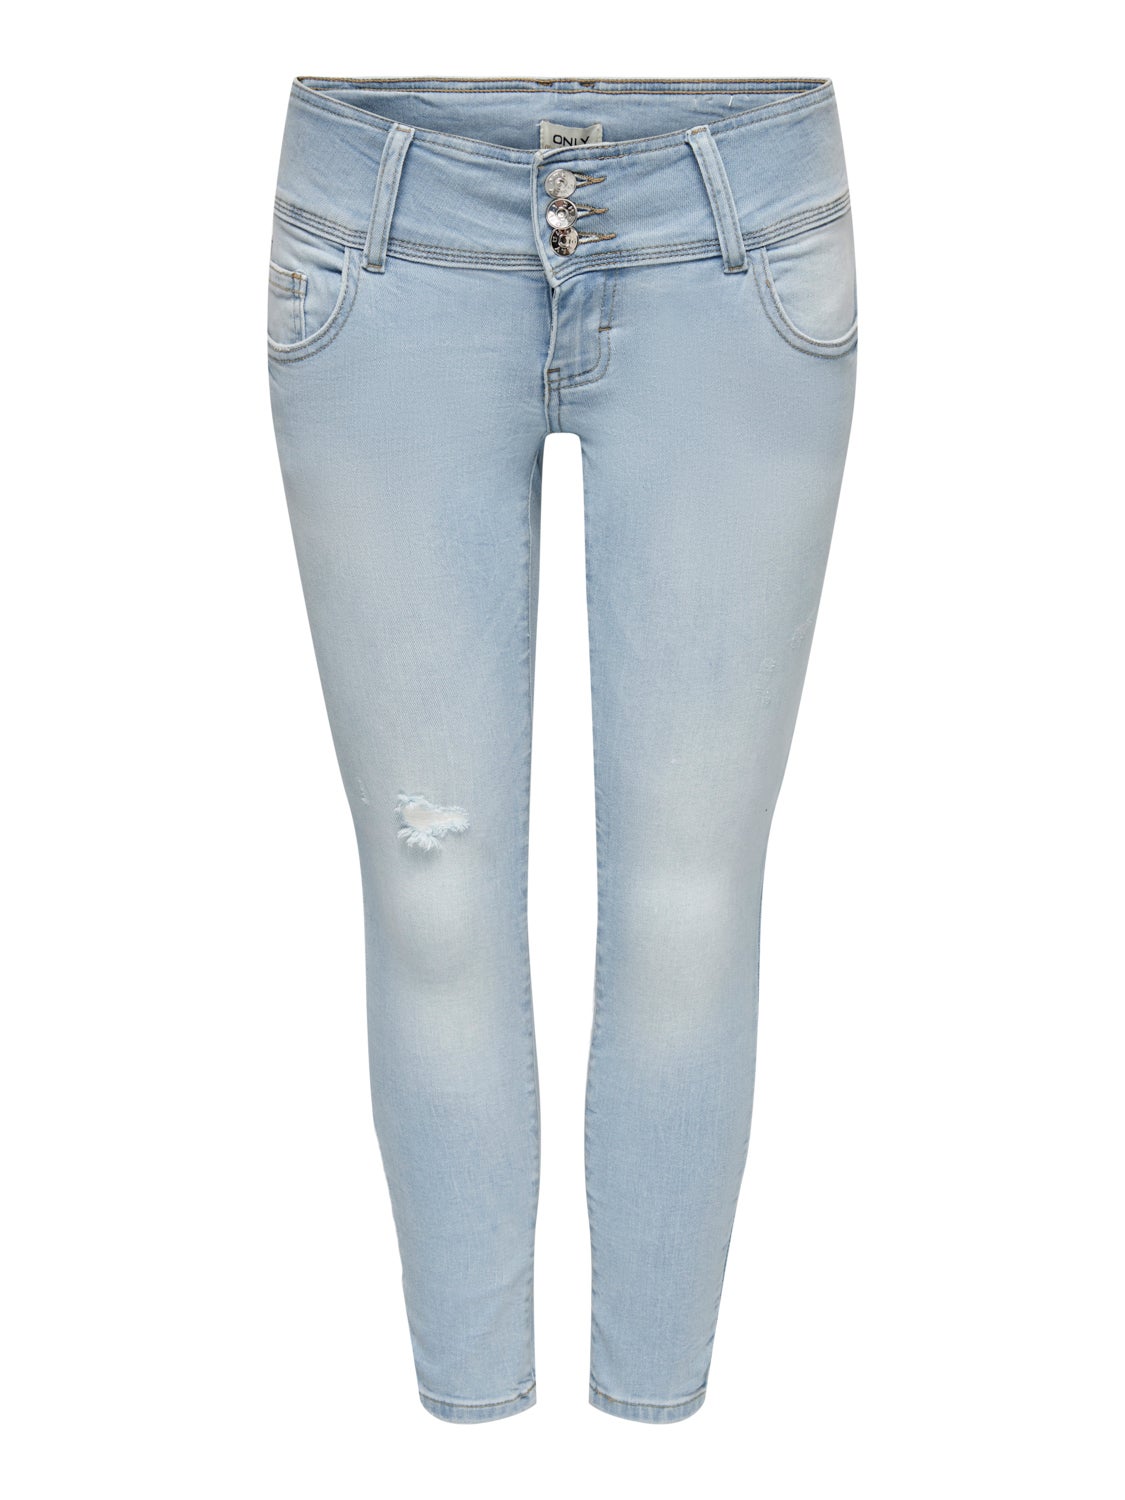 Mode Jeans Jeans taille basse Confortif Denim Jeans taille basse bleu mouchet\u00e9 style d\u00e9contract\u00e9 